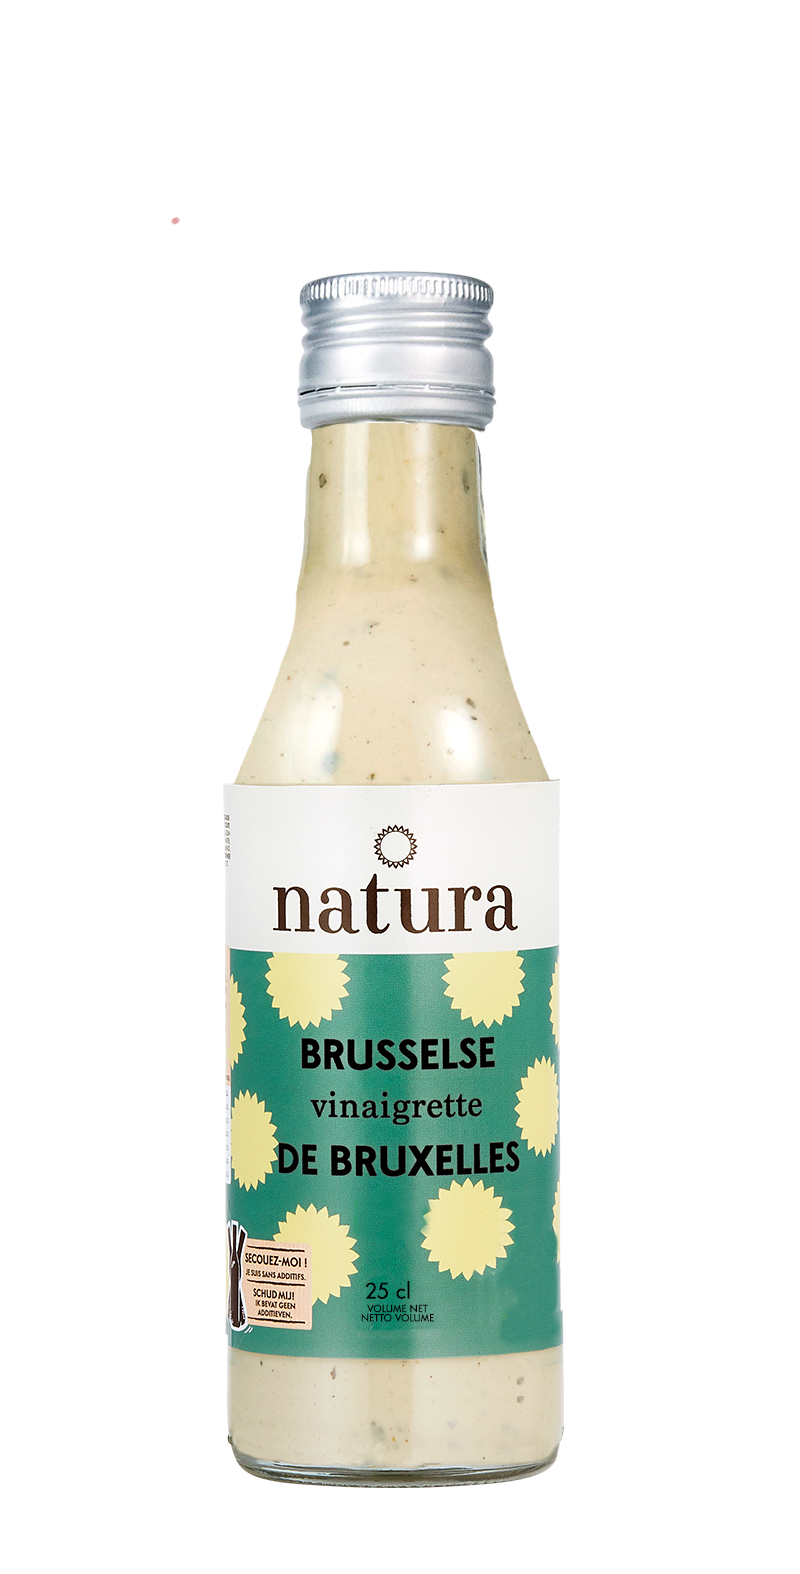 Natura Brusselse vinaigrette 25cl